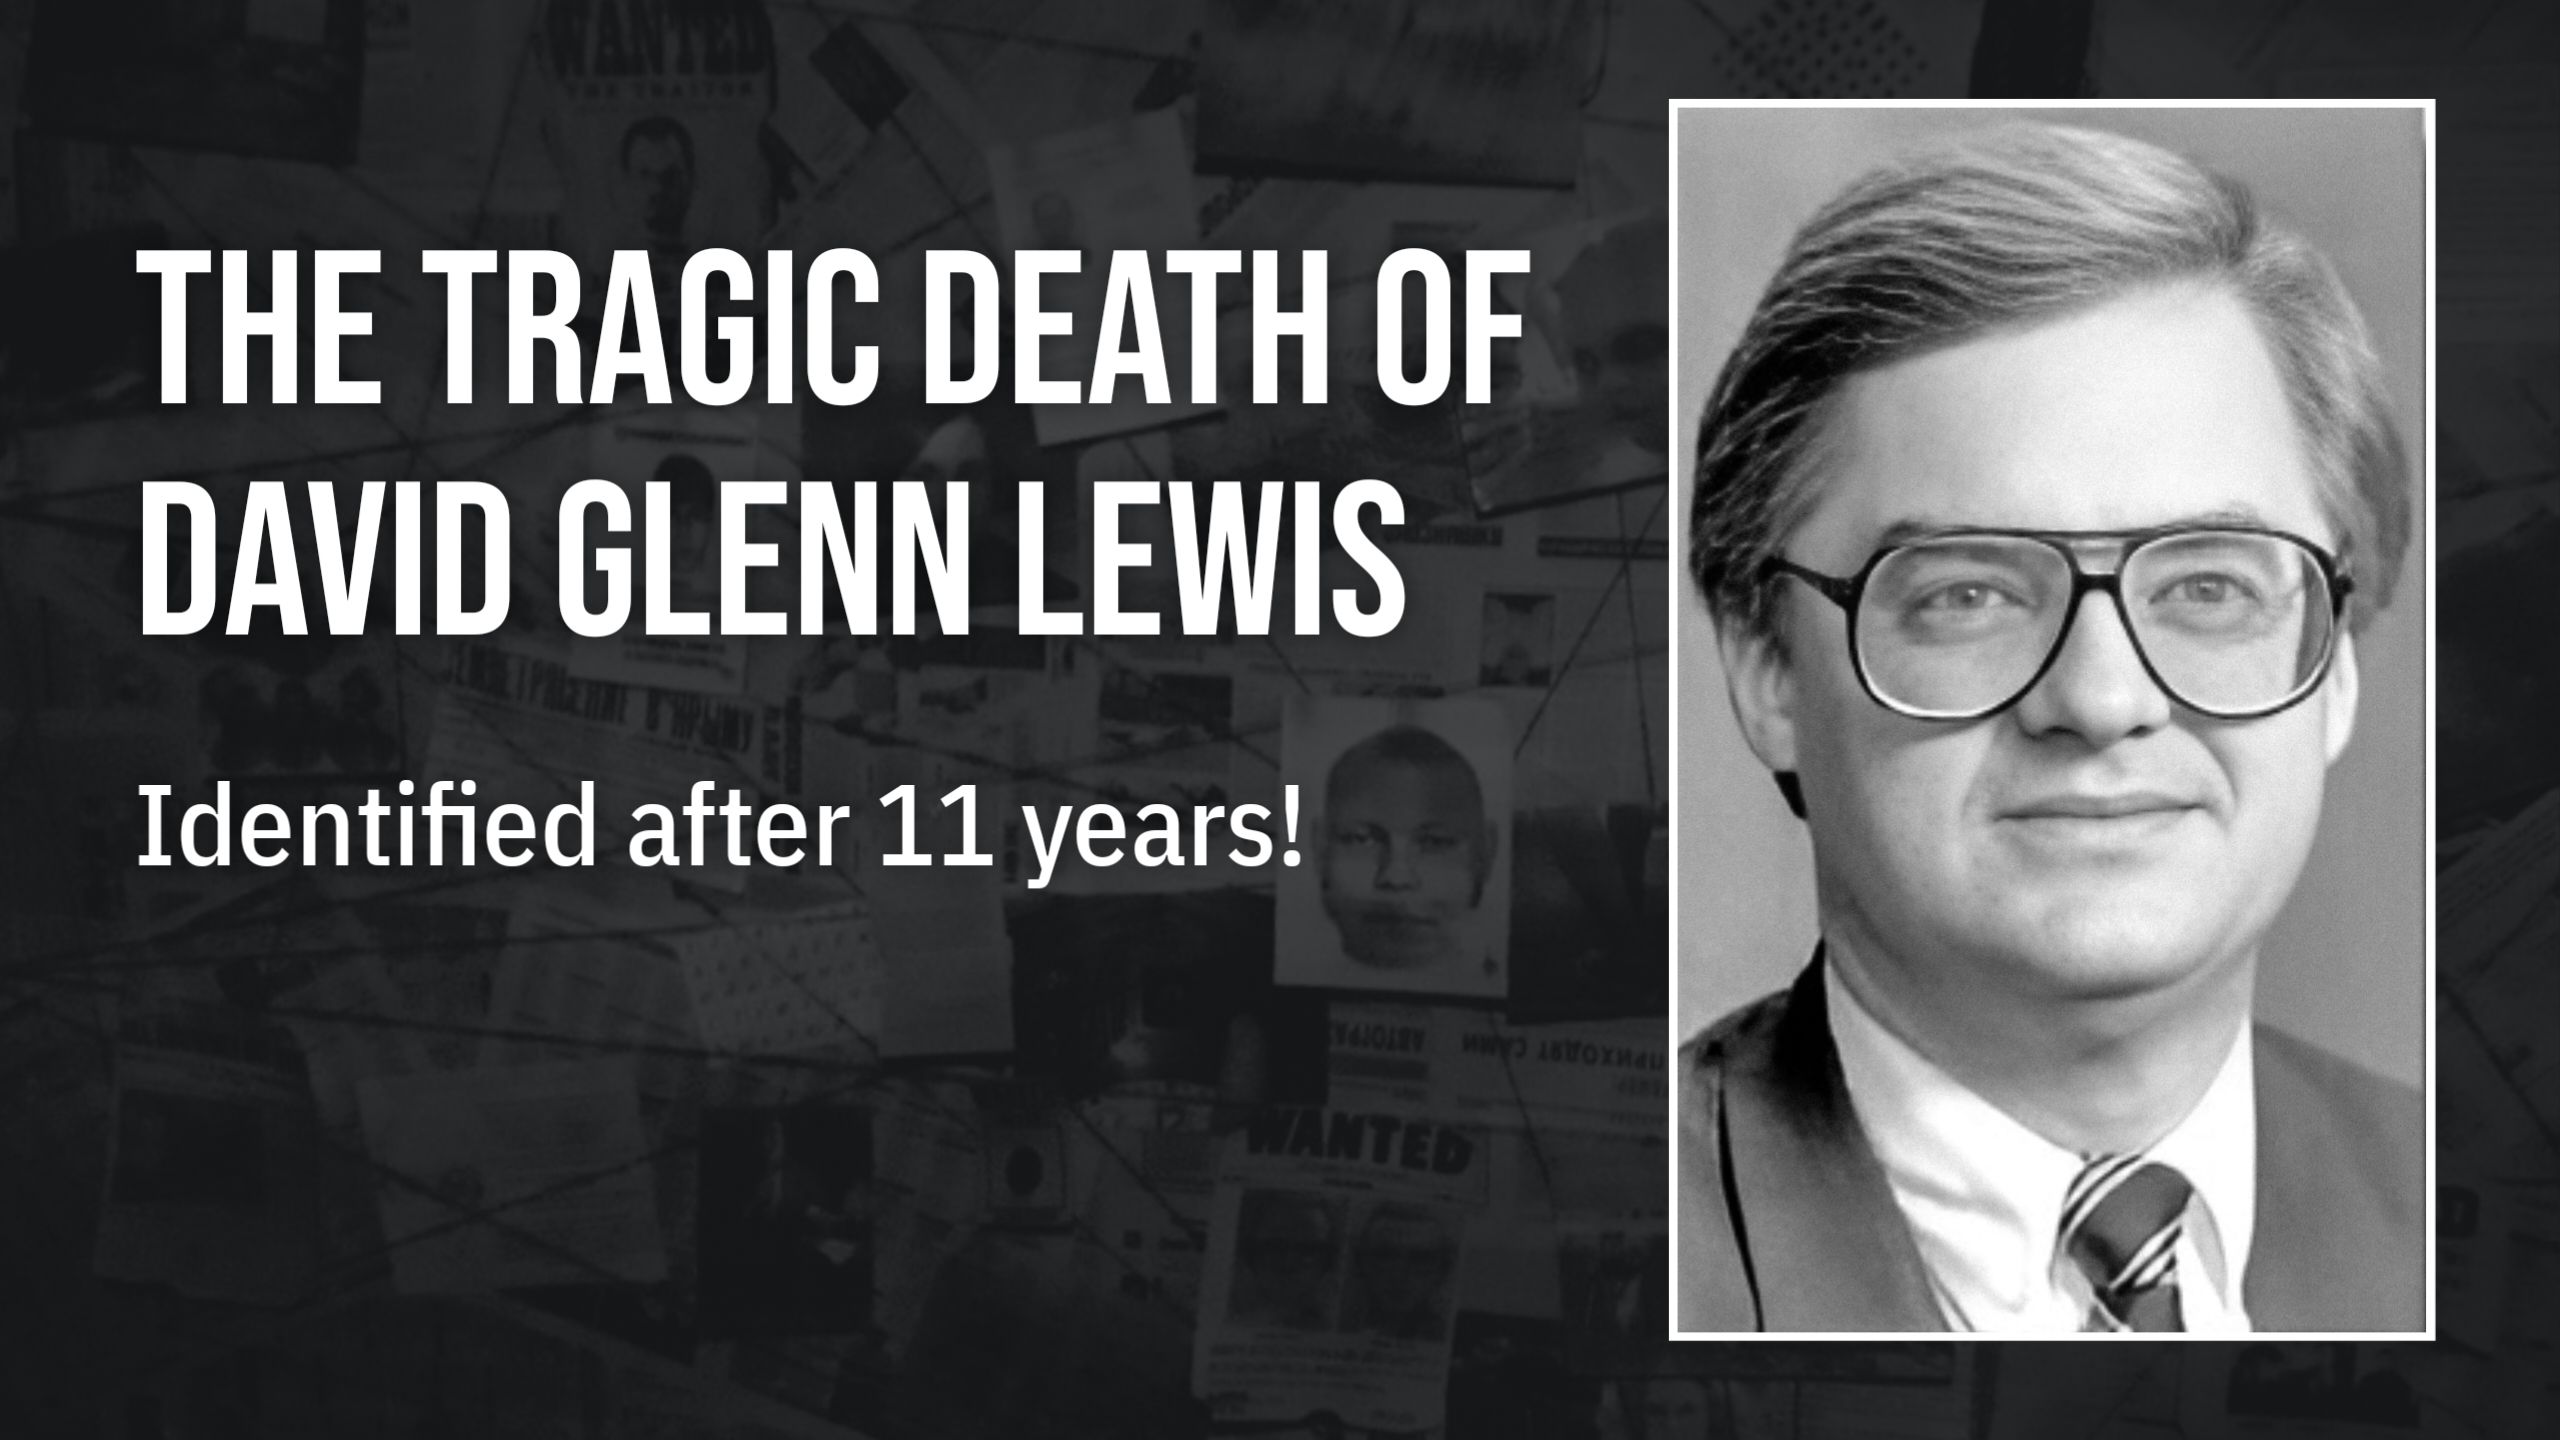 The tragic death of David Glenn Lewis. <a href="https://en.m.wikipedia.org/wiki/Death_of_David_Glenn_Lewis#/media/File%3ADavid_Glenn_Lewis.jpeg" target="_blank" rel="noopener">Wikimedia Commons</a> / MRU.INK